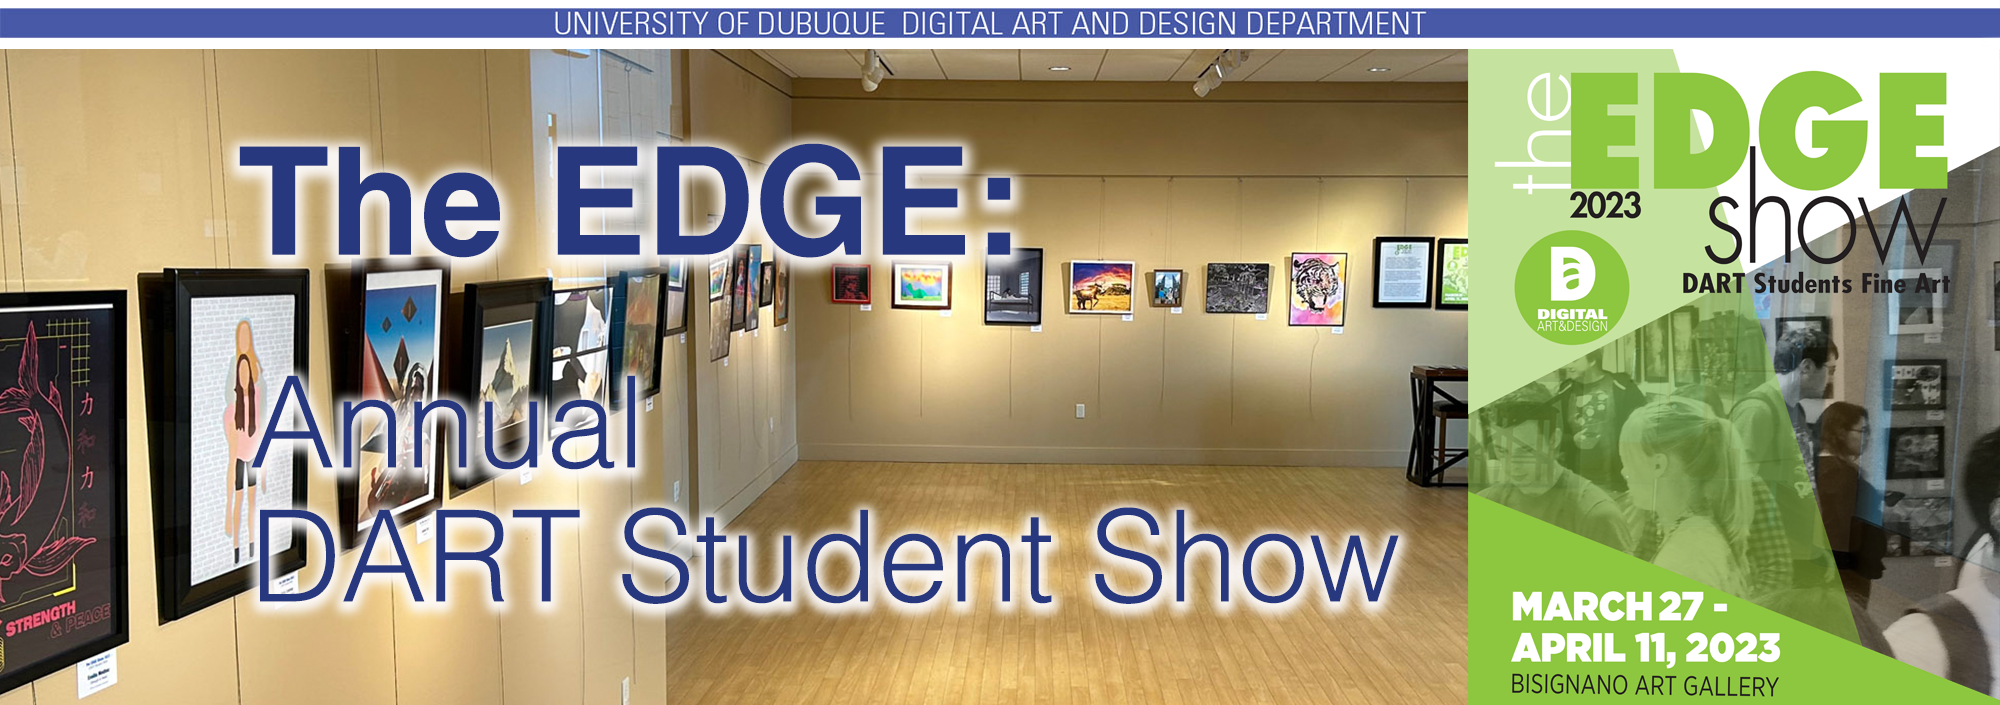 The EDGE: Annual DART Student Exhibit